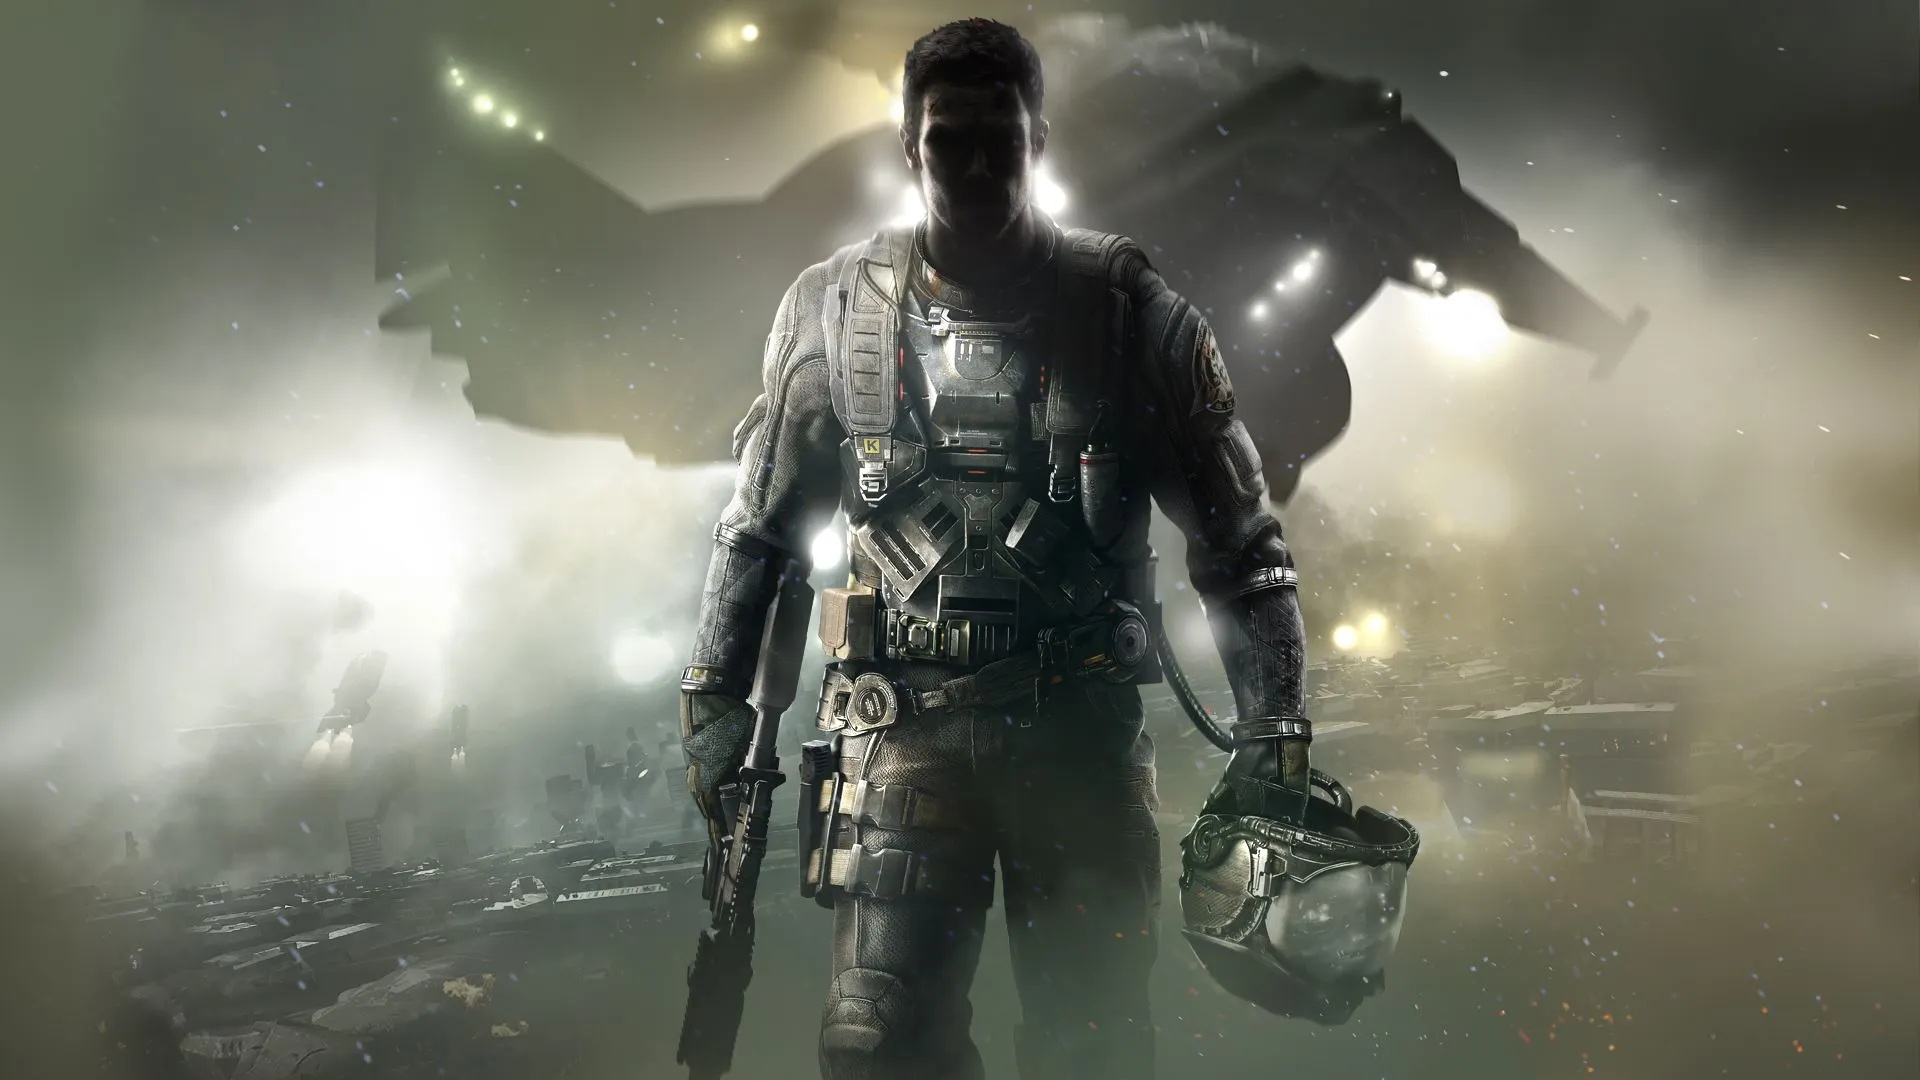 Review: Call of Duty: Infinite Warfare – Destructoid